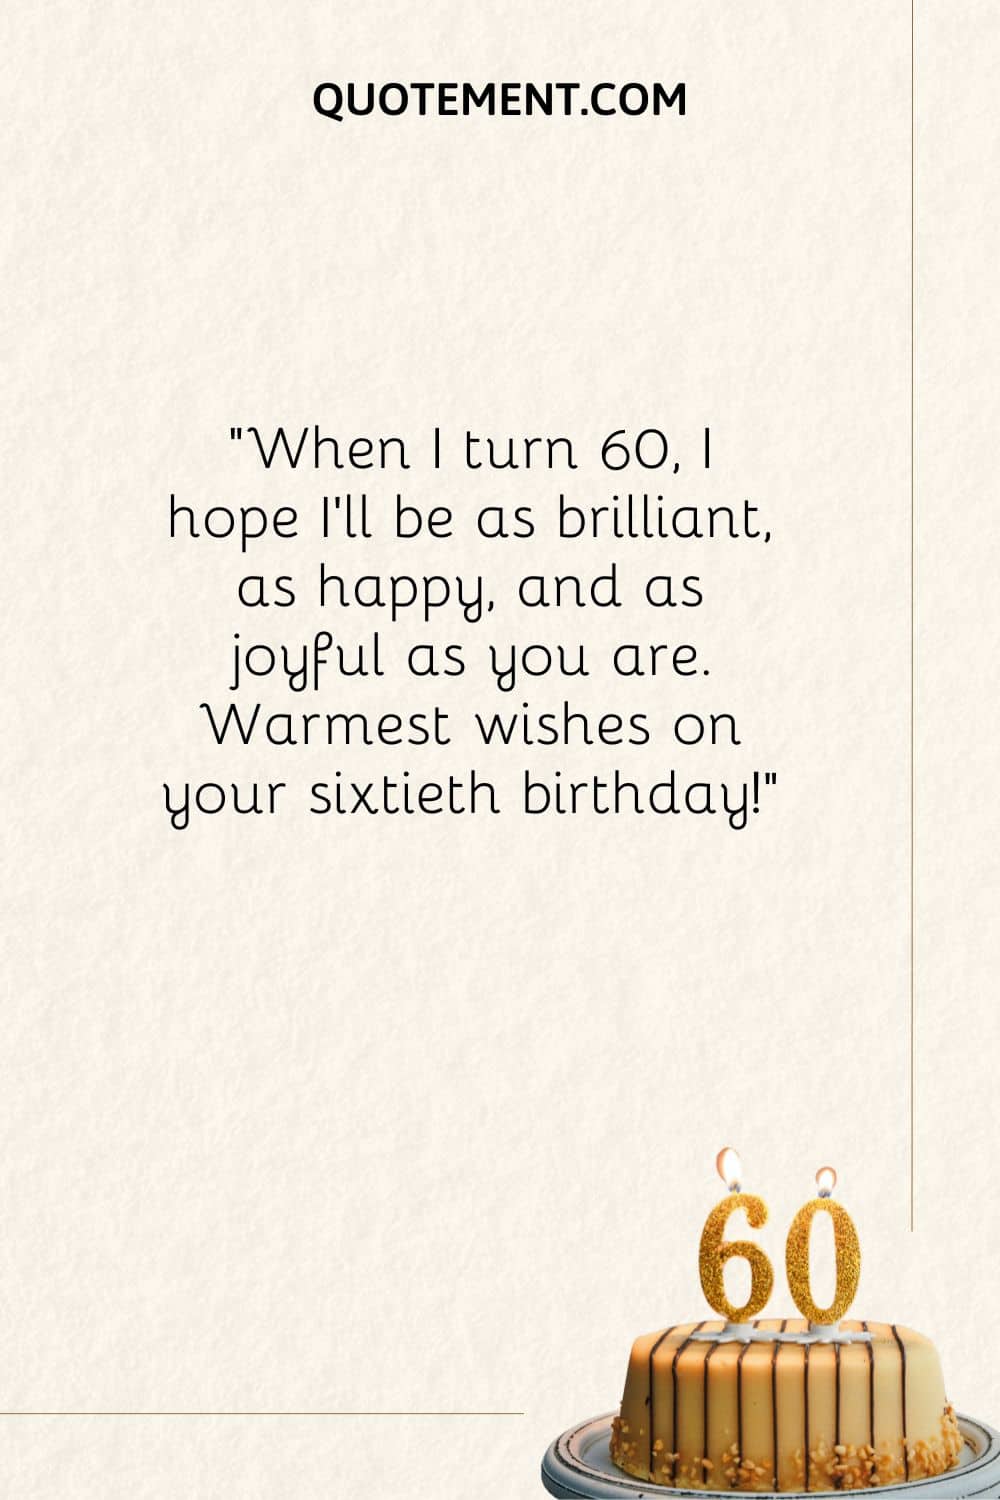 image of a birthday cake representing top happy 60th birthday wish